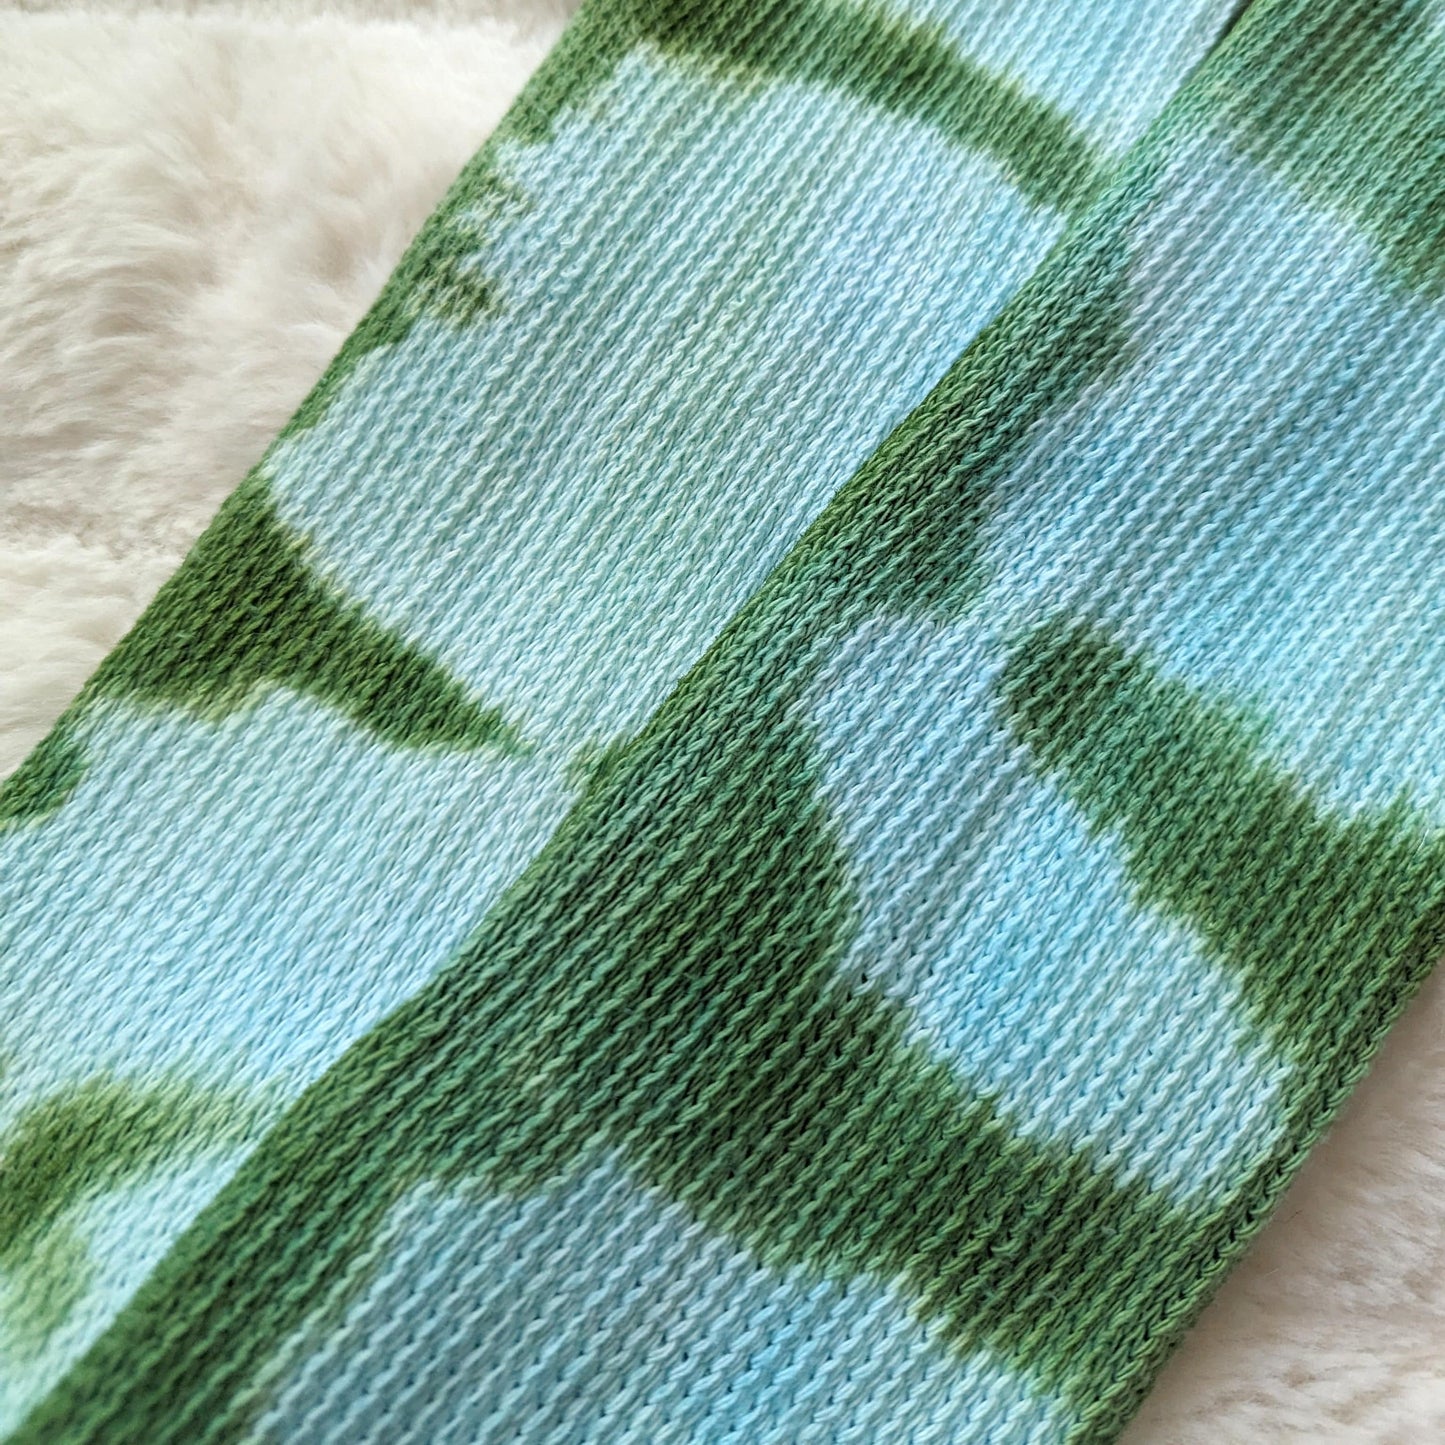 Cozy Sea Elf Socks - Blue Green Cotton Tie-dyed thigh high socks